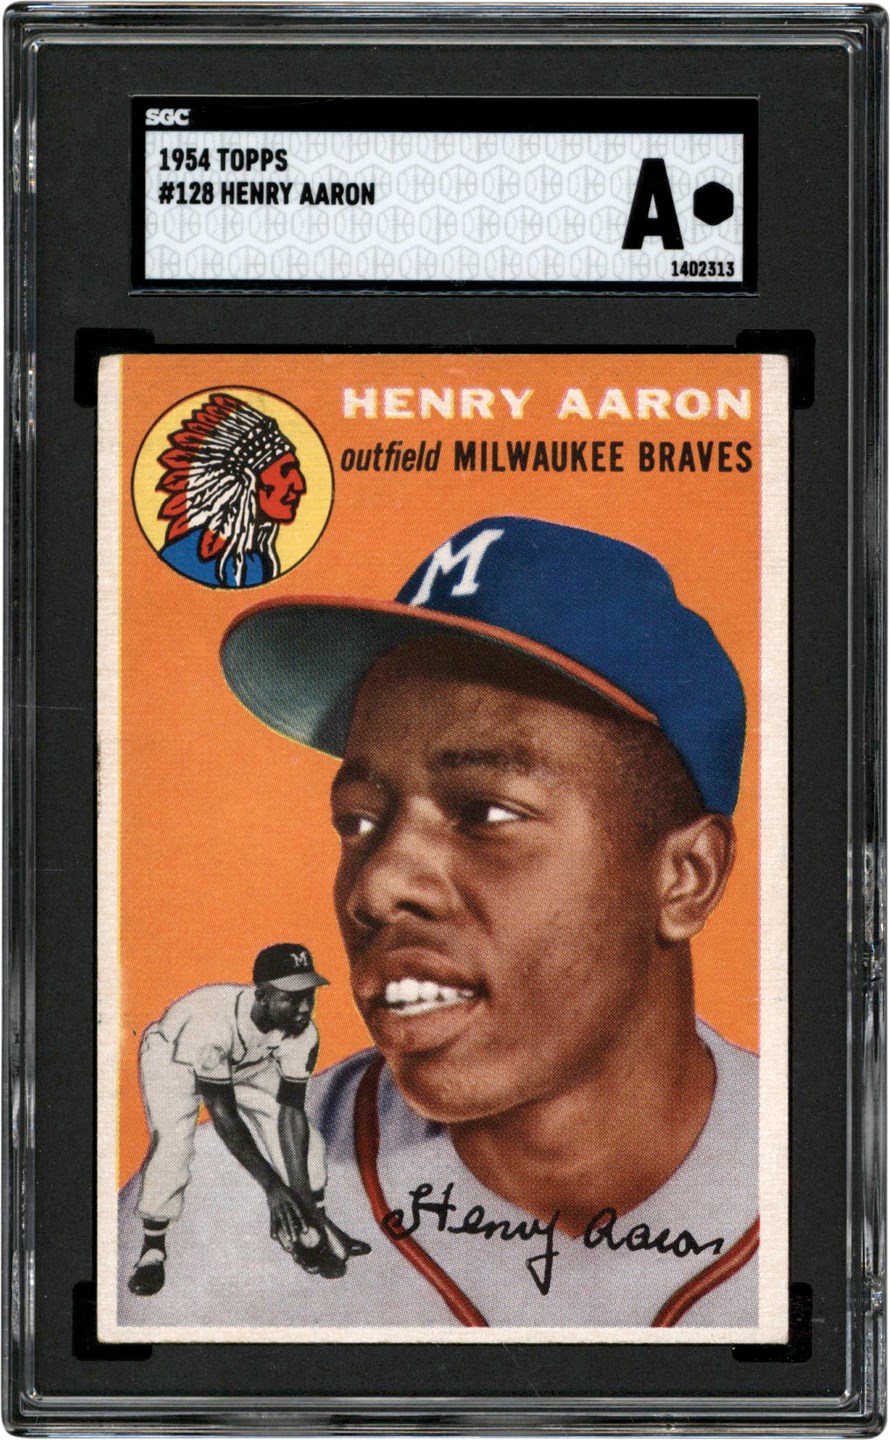 - 1954 Topps #128 Hank Aaron Rookie Card SGC Authentic